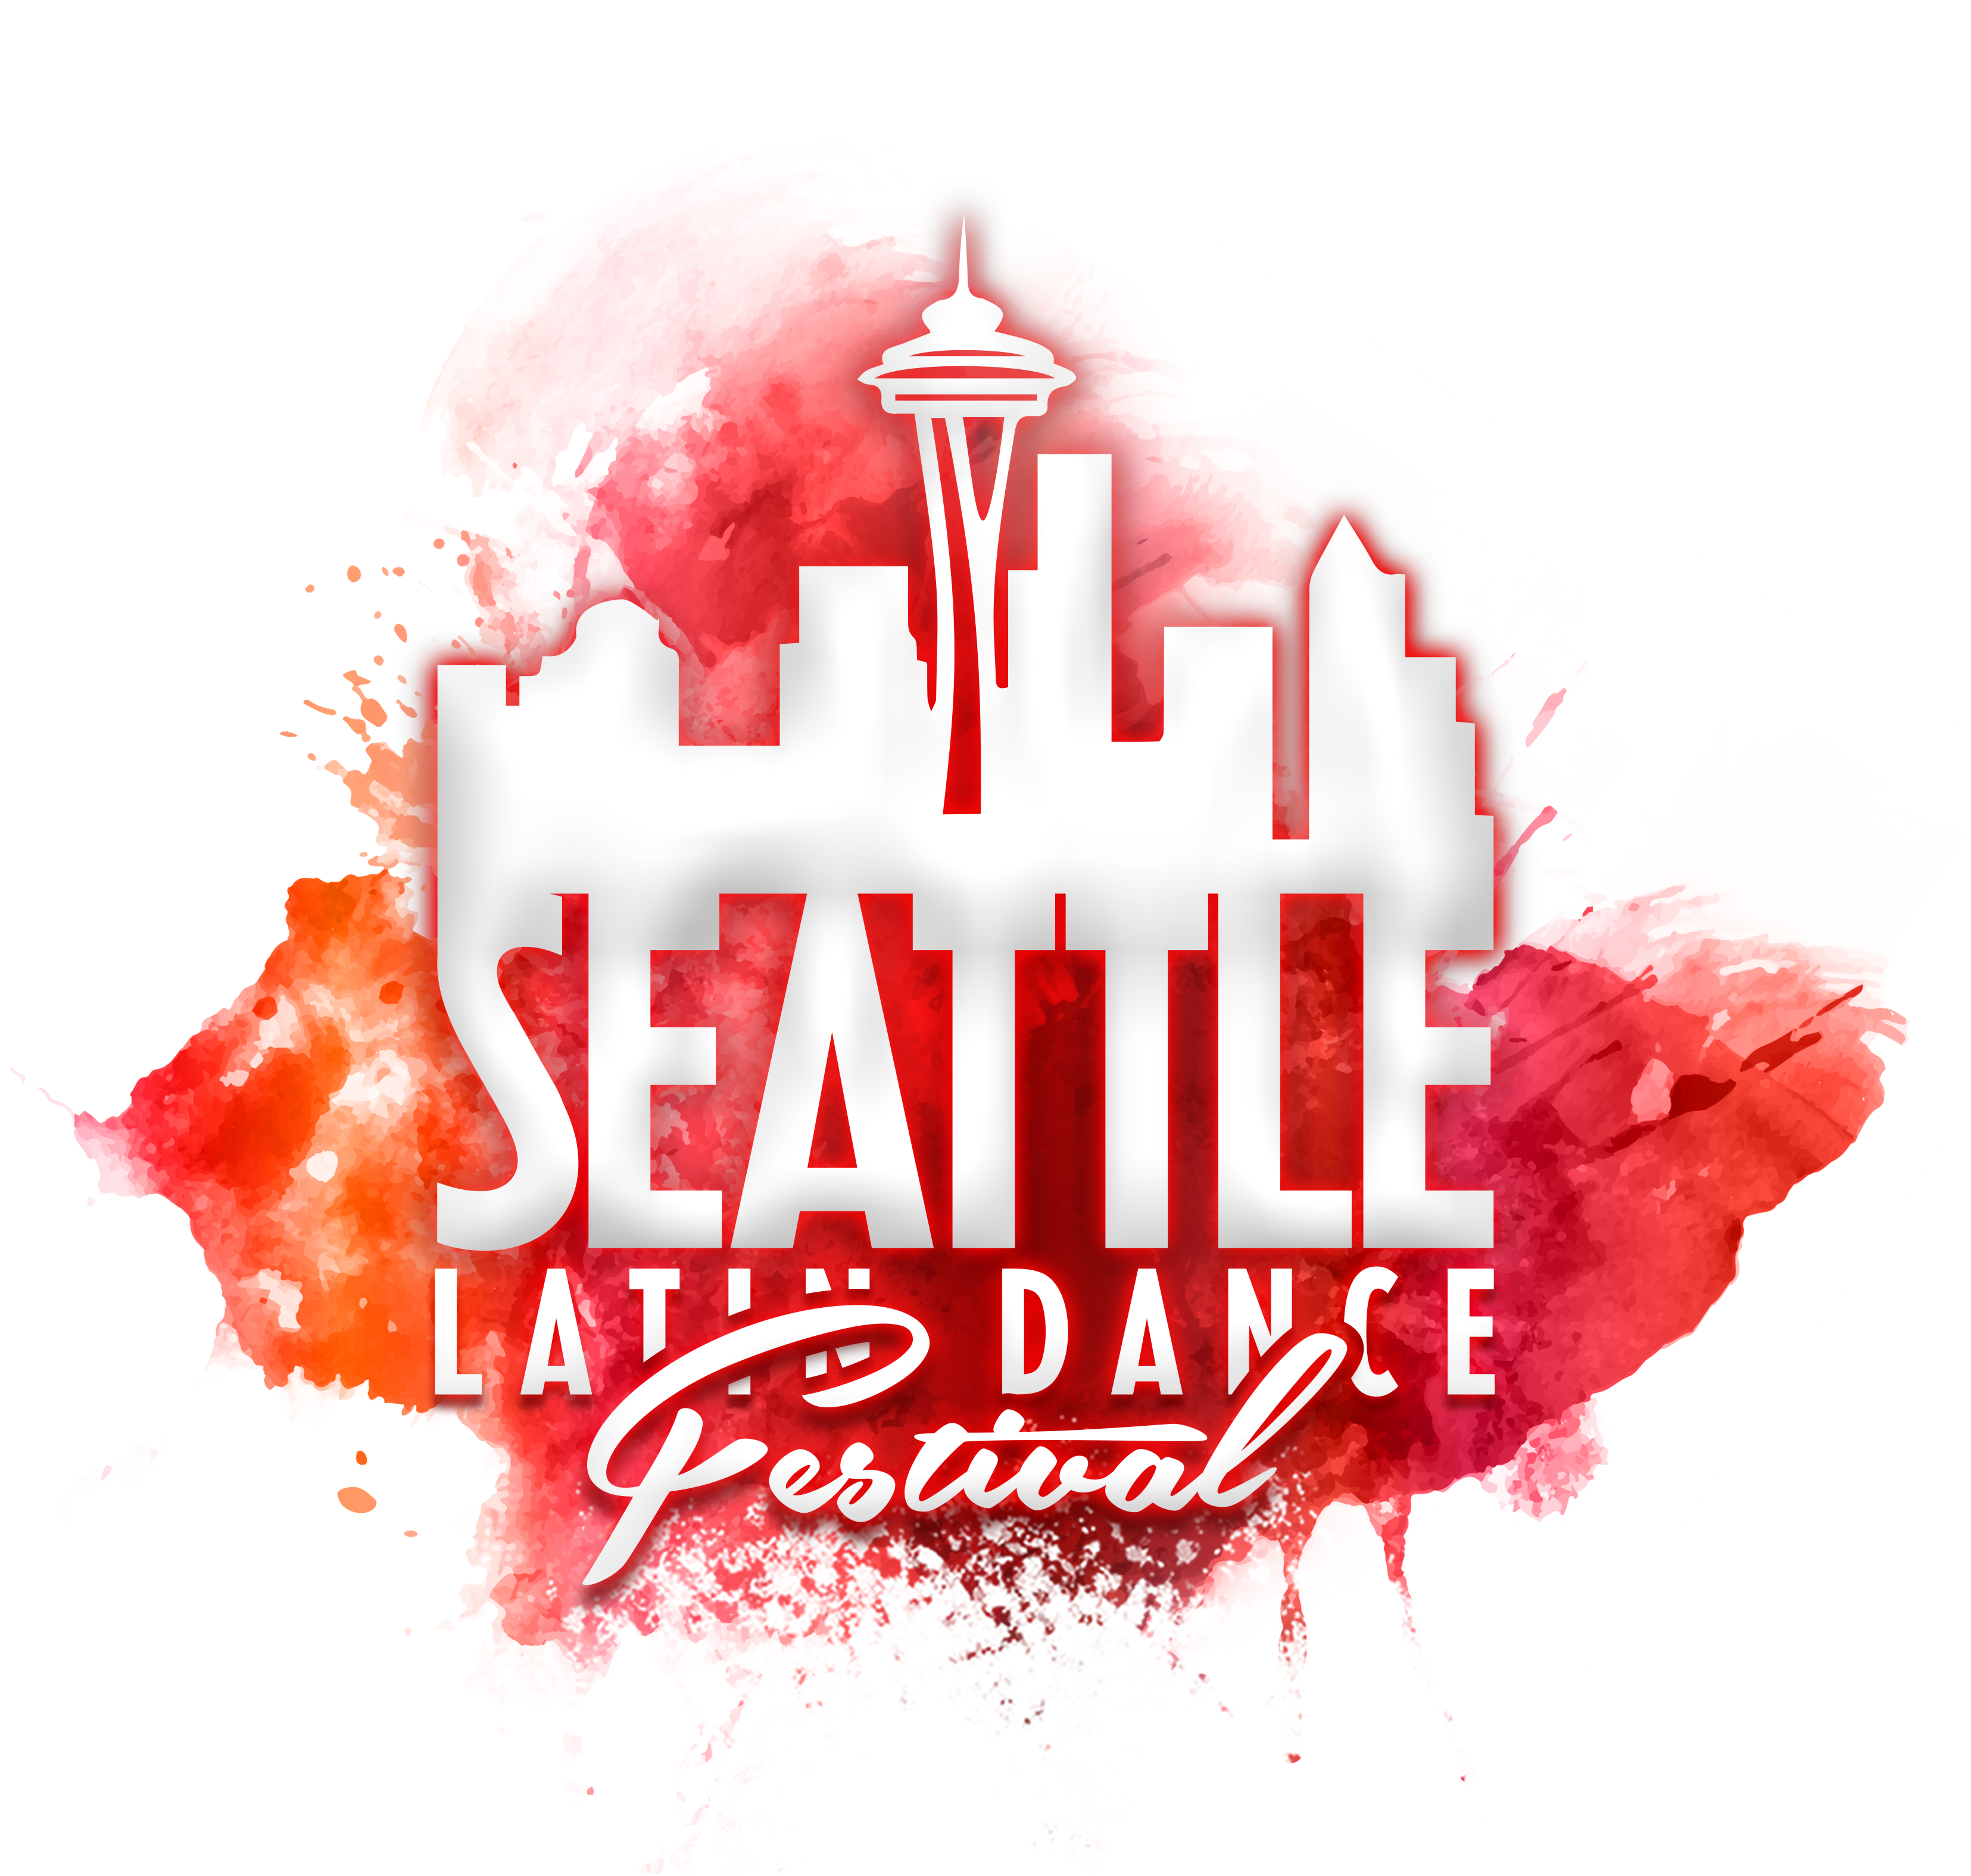 Seattle Latin Dance Festival